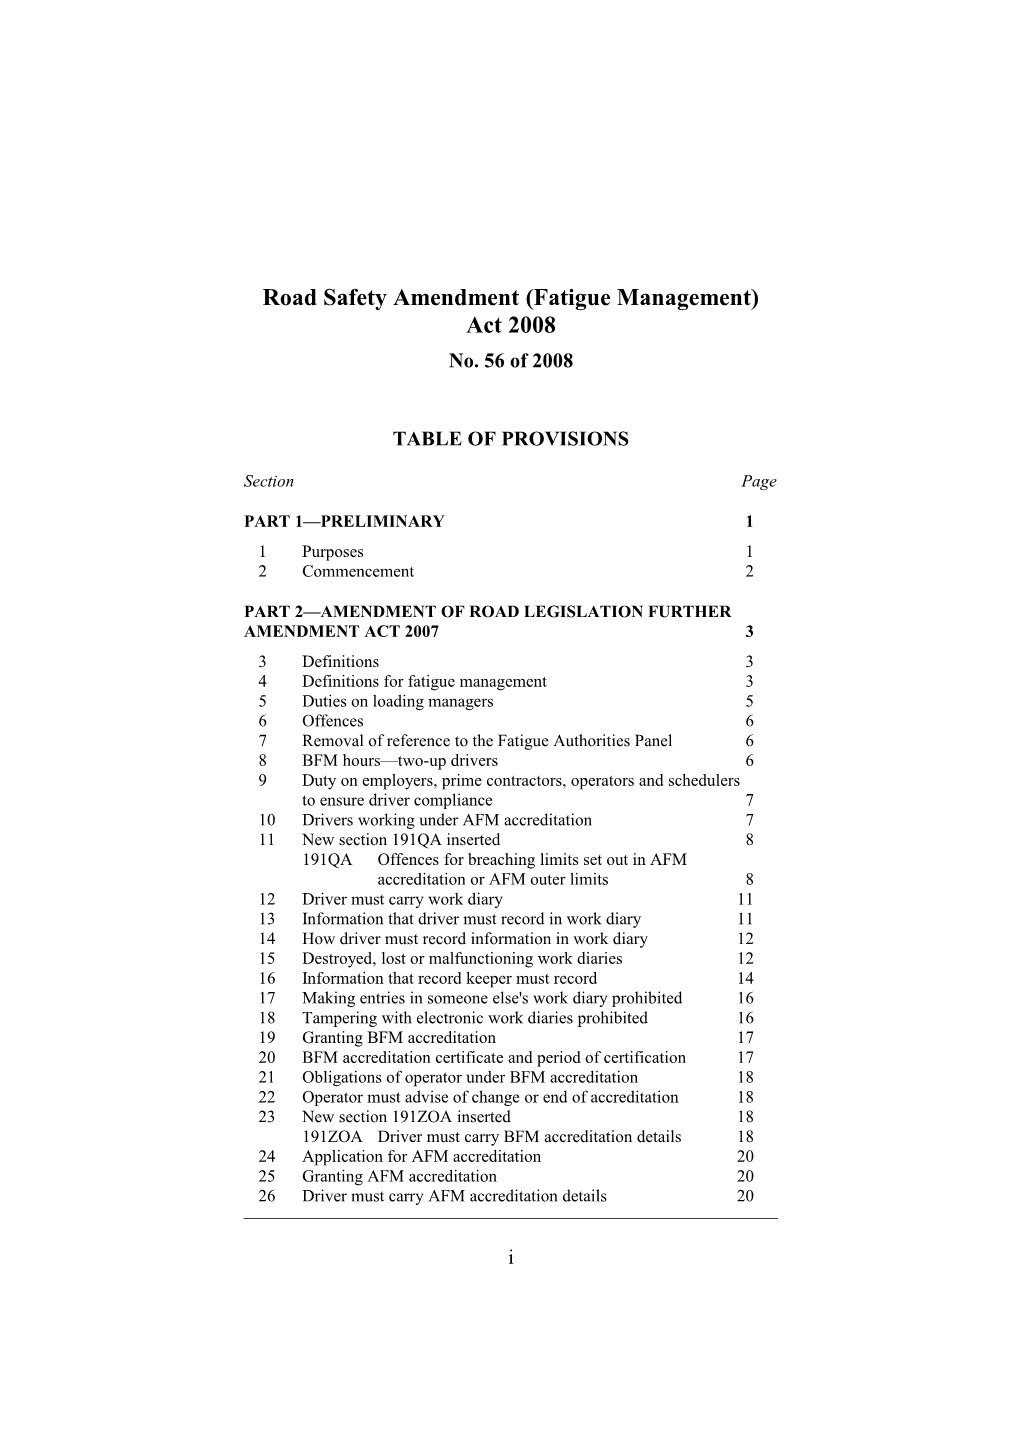 Road Safety Amendment (Fatigue Management) Act 2008